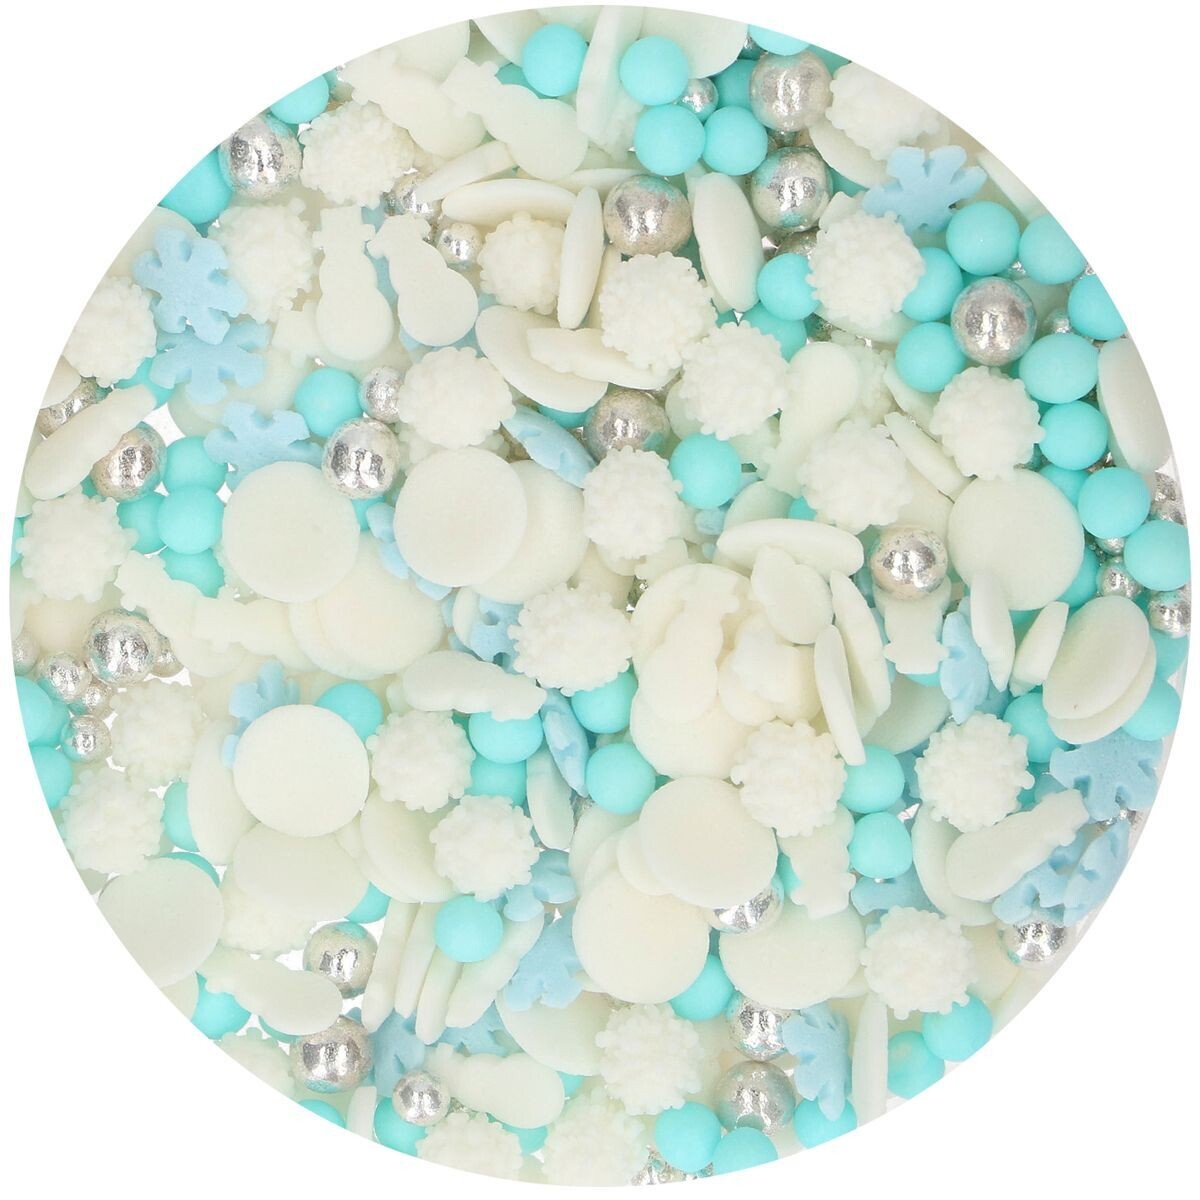 FunCakes Sprinkle Mix 50γρ -FROZEN MEDLEY - Μείγμα Ζαχαρωτών σε Γαλάζιο, Λευκό και Ασημί